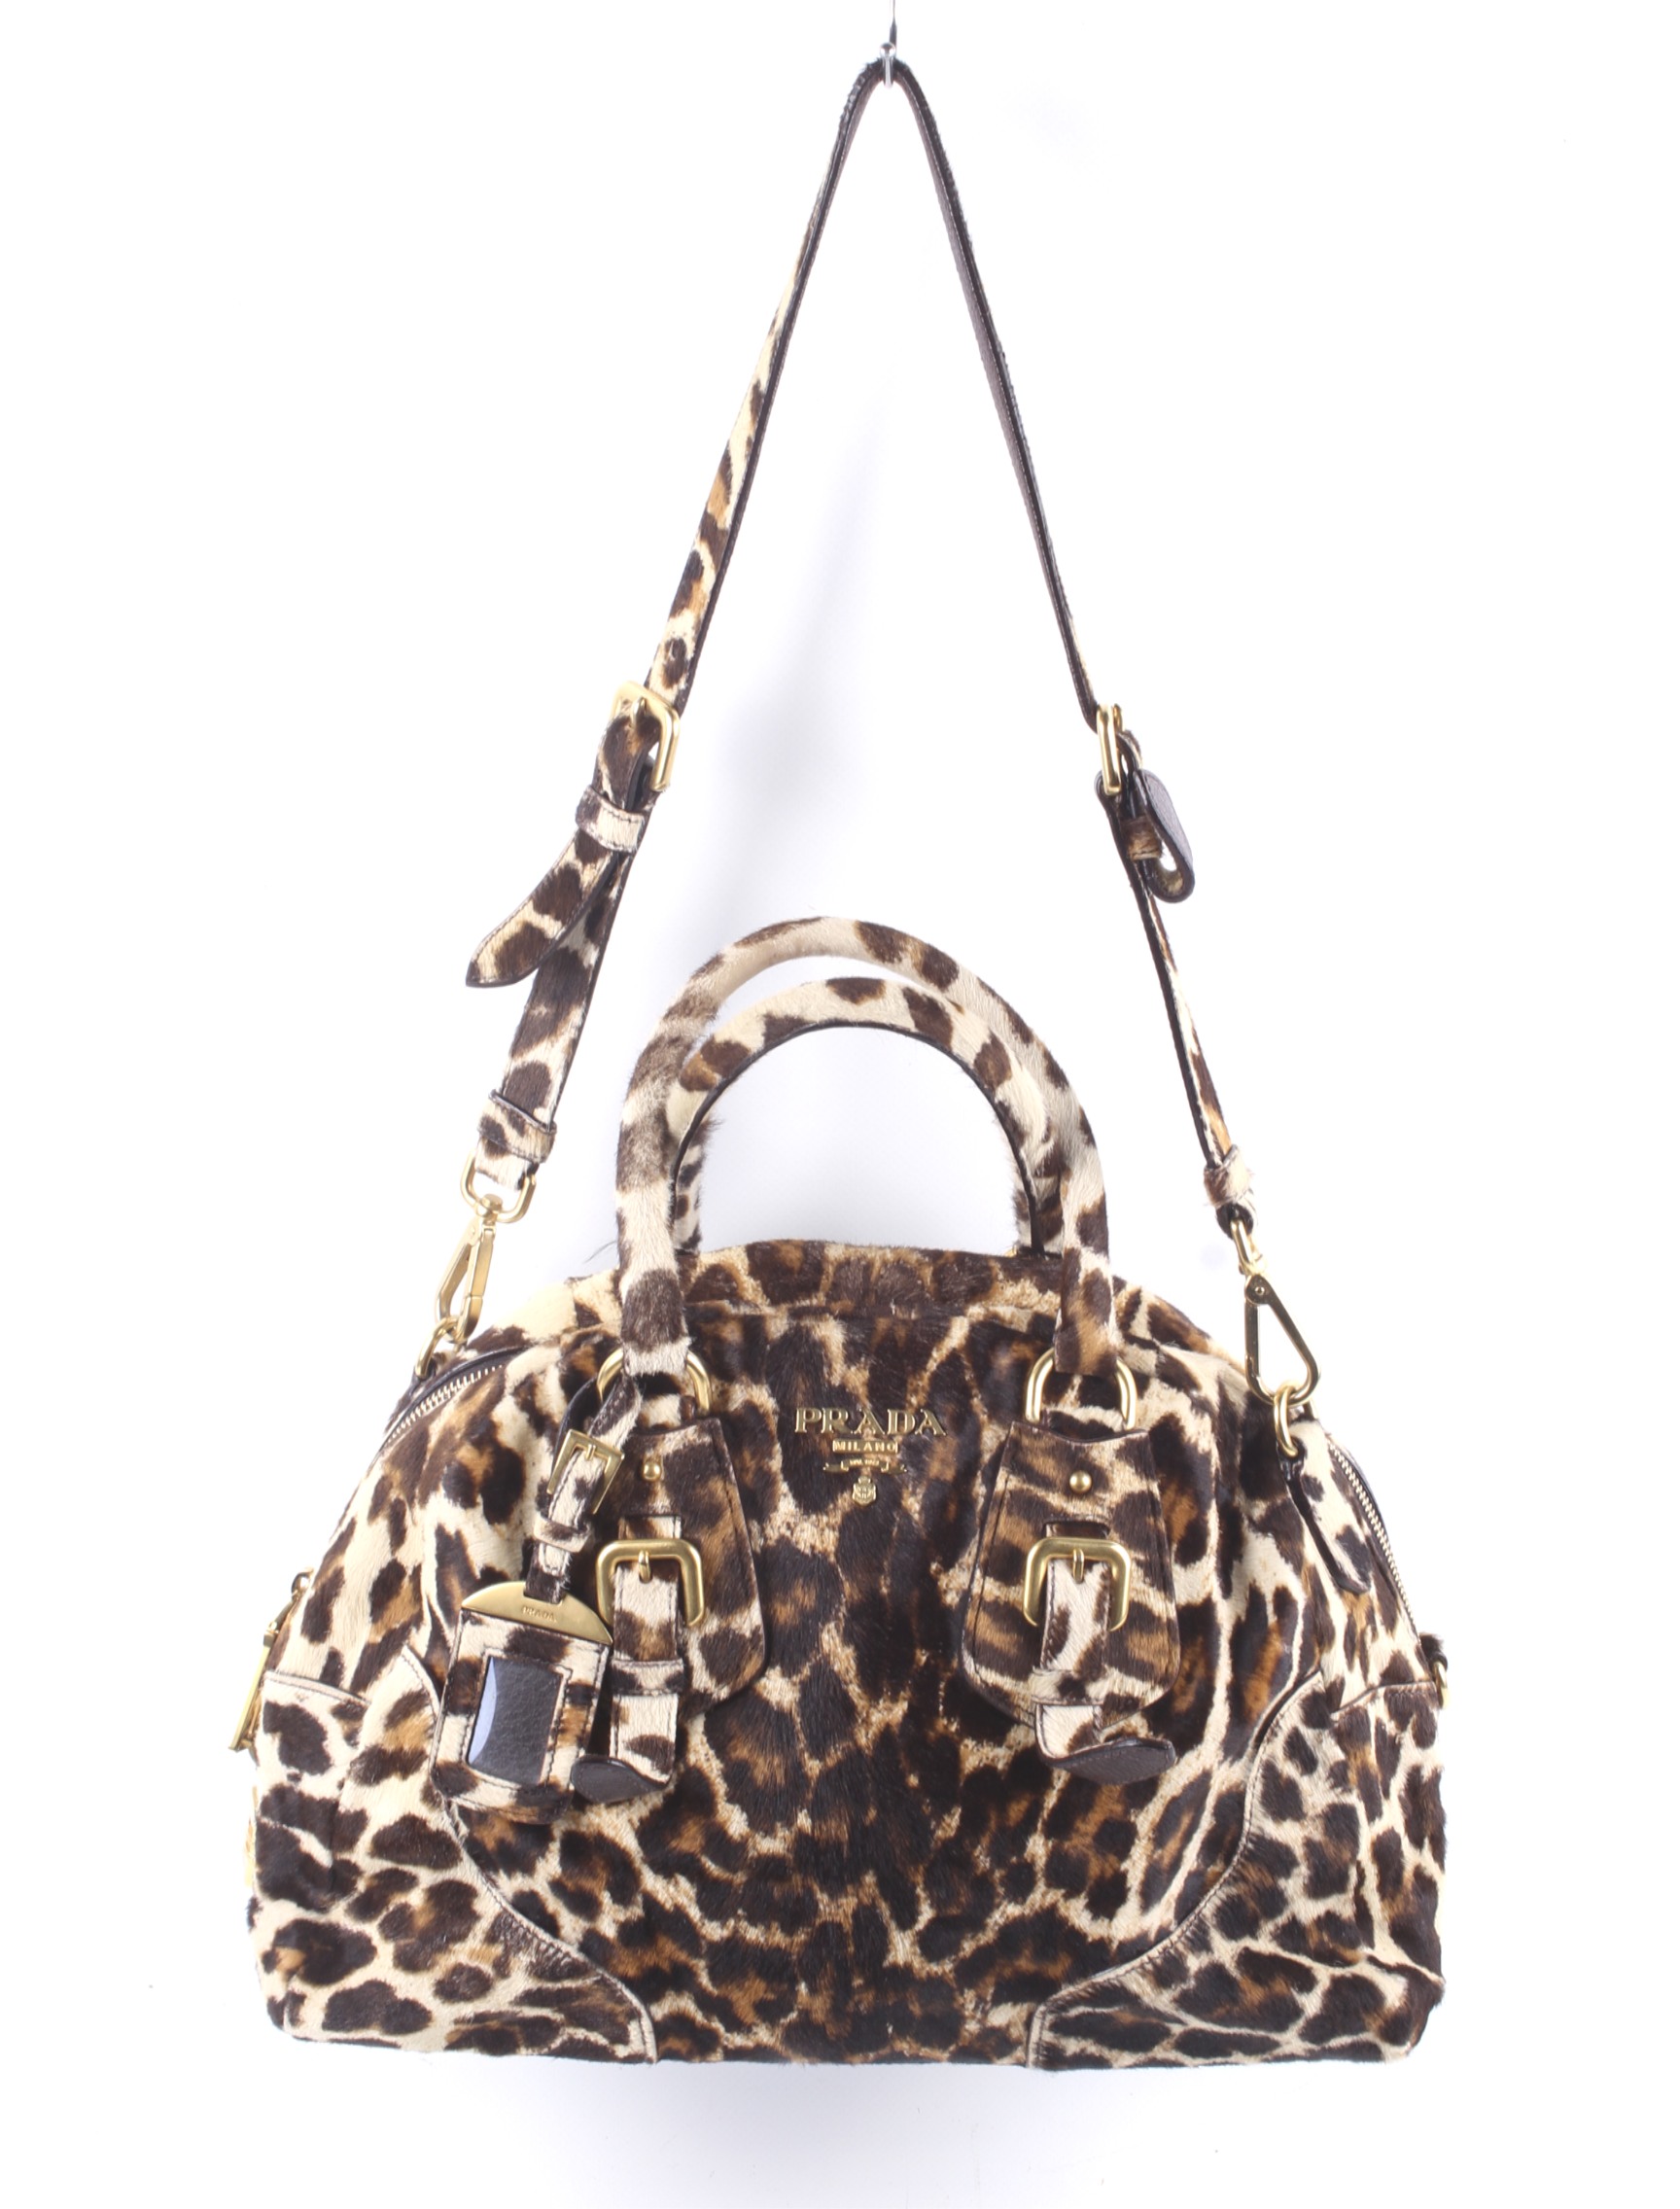 A Prada calf hair leopard print handbag. Made in Italy, circa 2000.